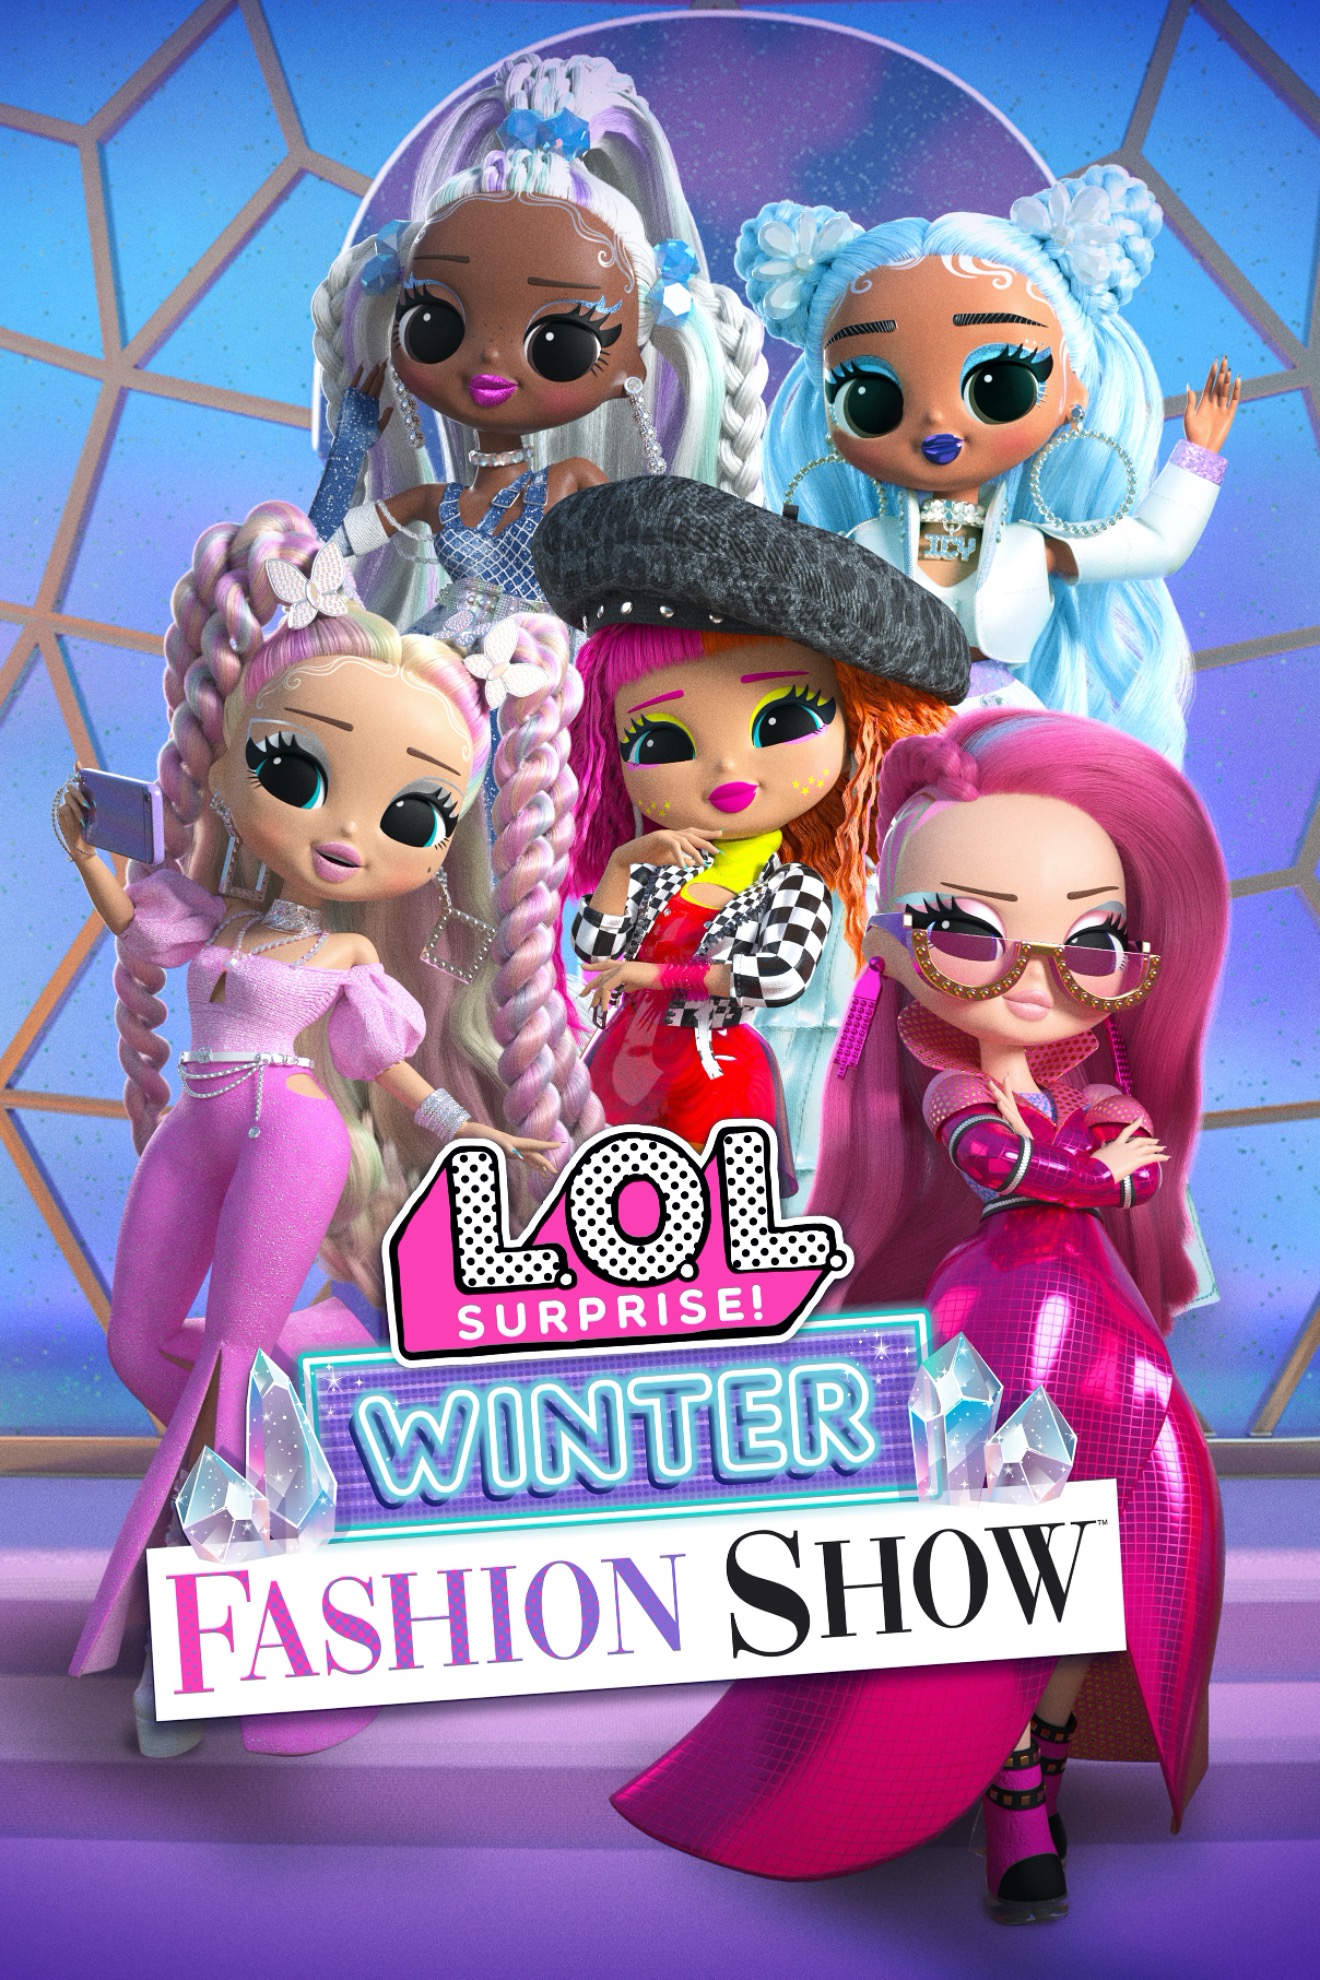 L.O.L. Surprise! Winter Fashion Show Movie Poster